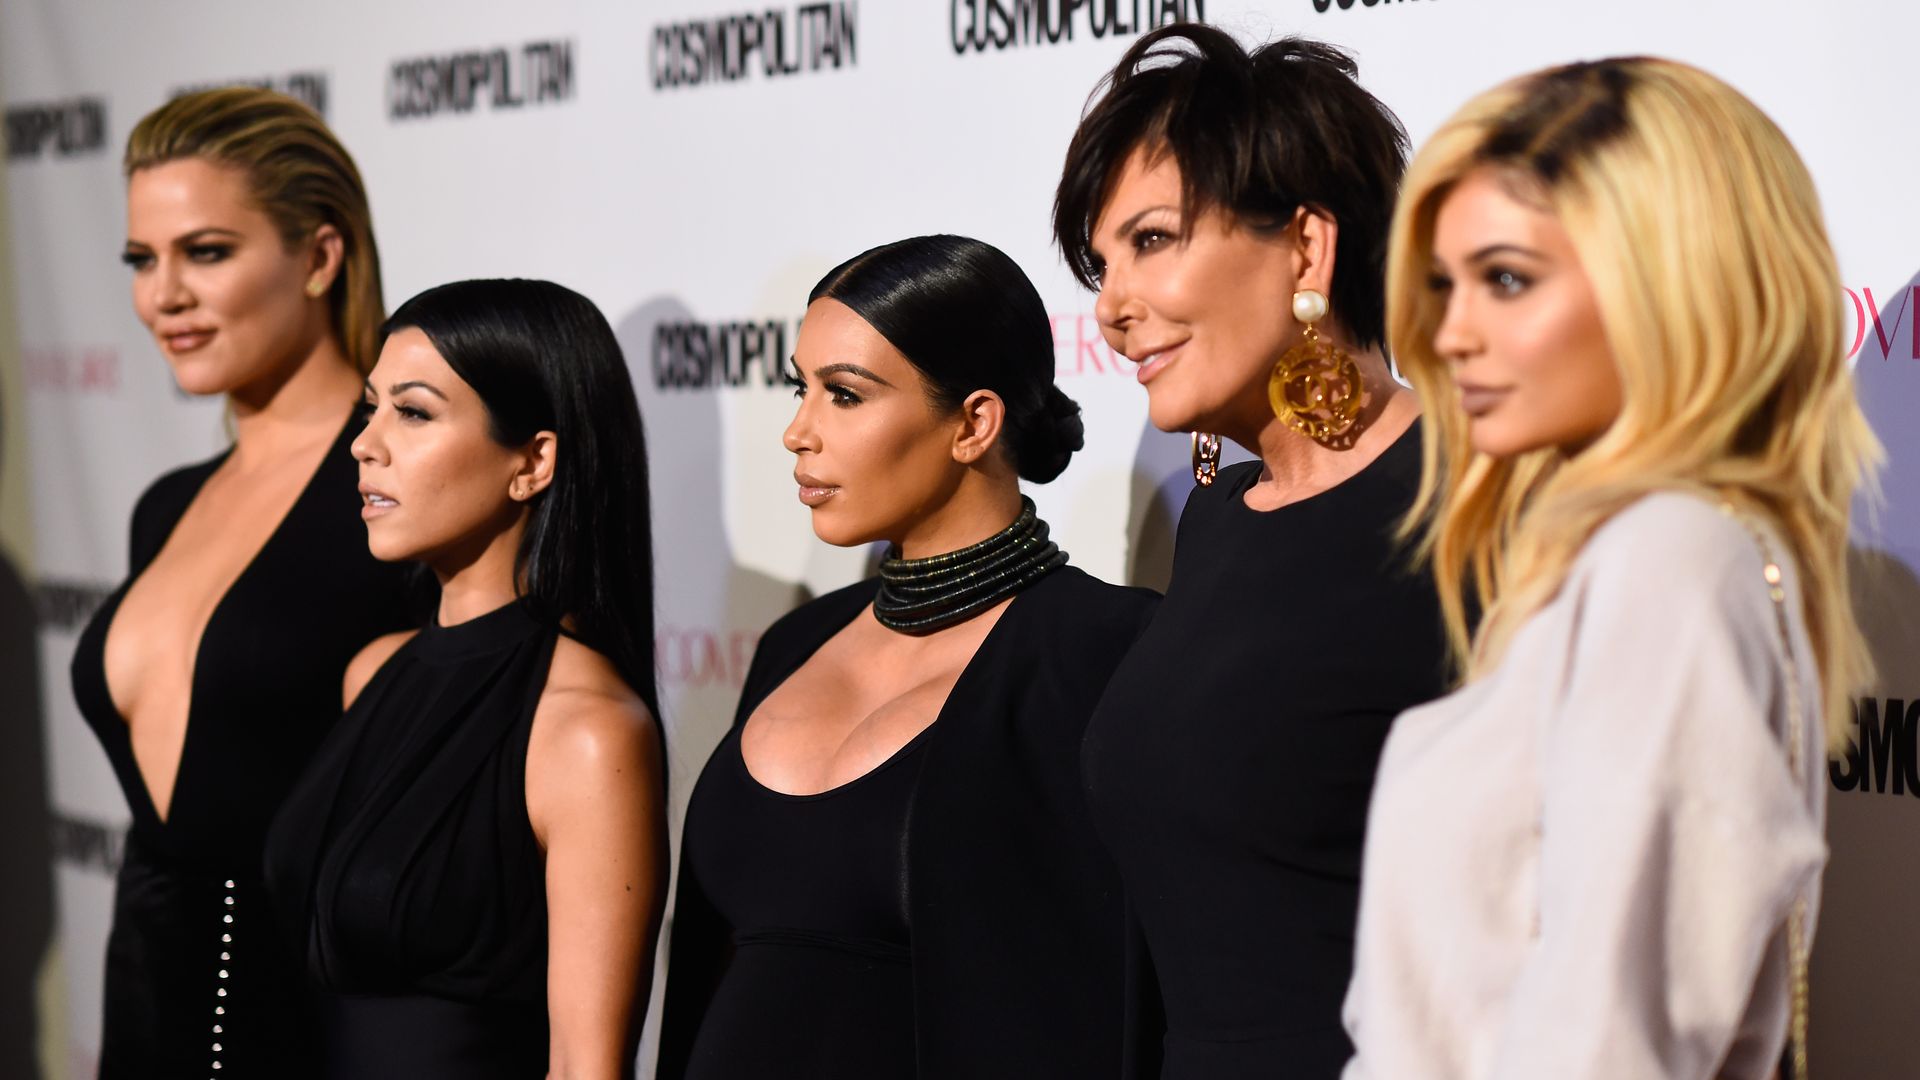 Kylie Jenner, Kris Jenner, Kim Kardashian, Kourtney Kardashian and Khloe Kardashian stood at an event